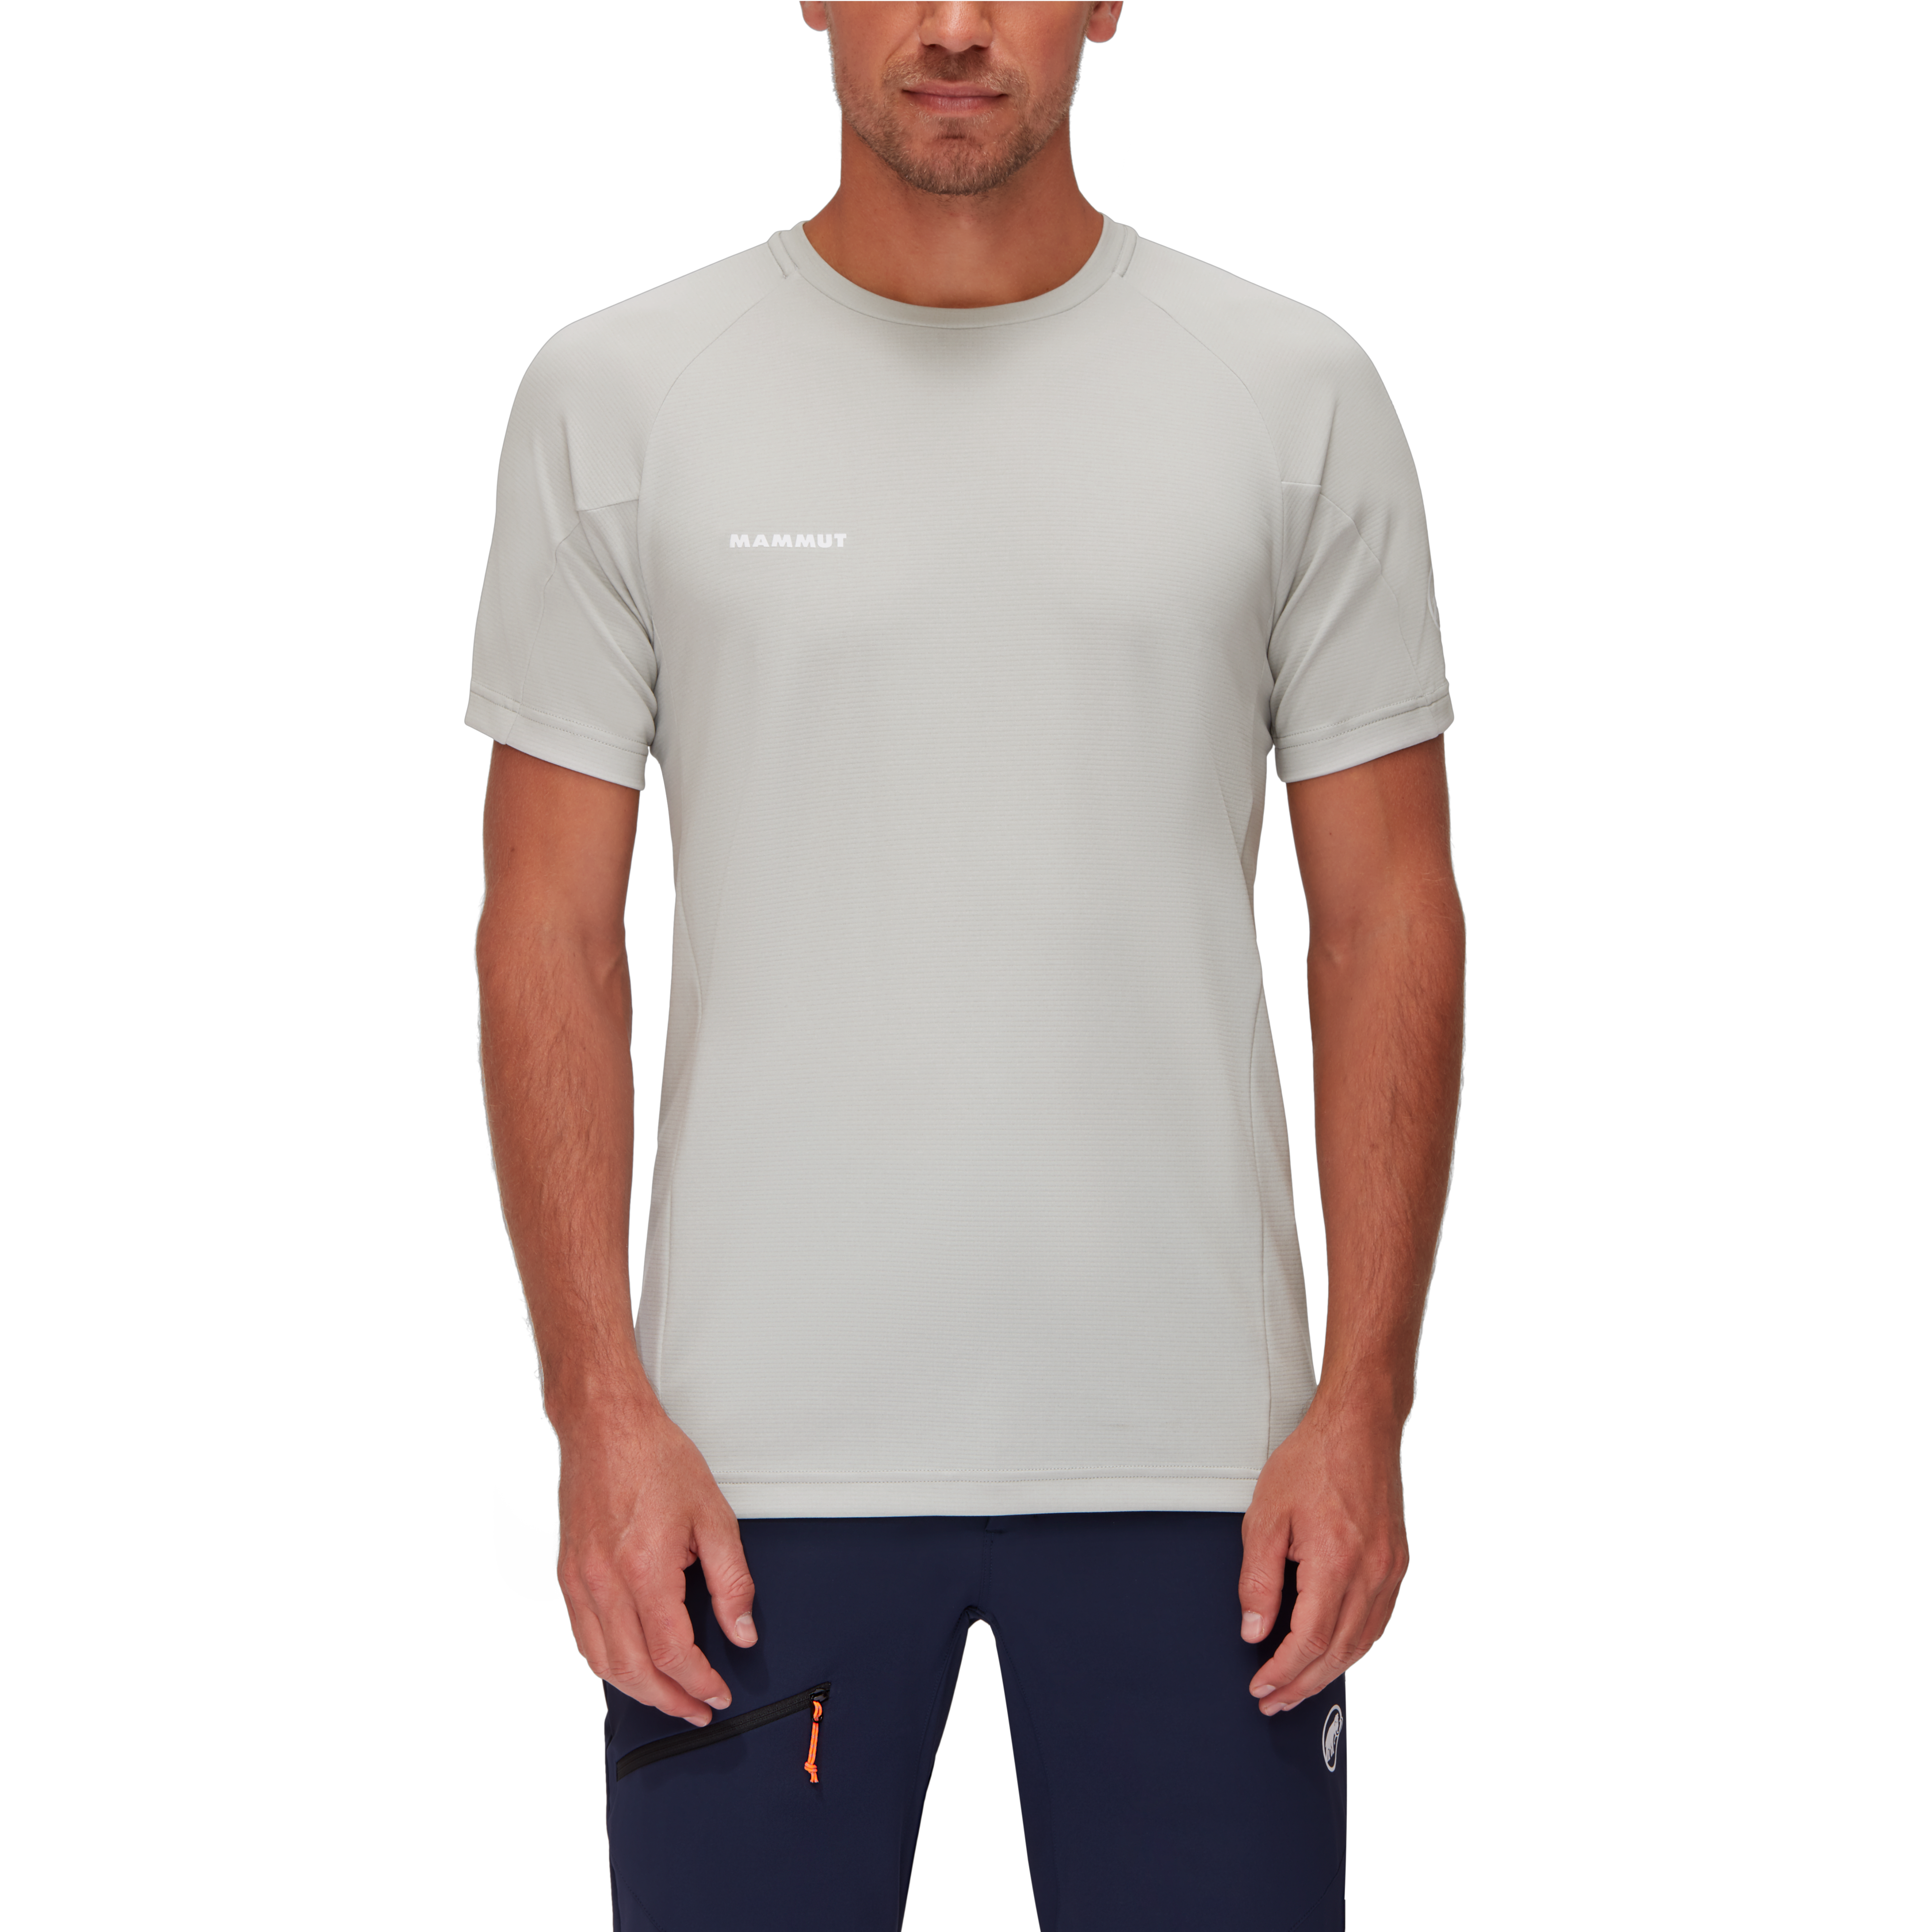 Aegility FL T-Shirt Men product image